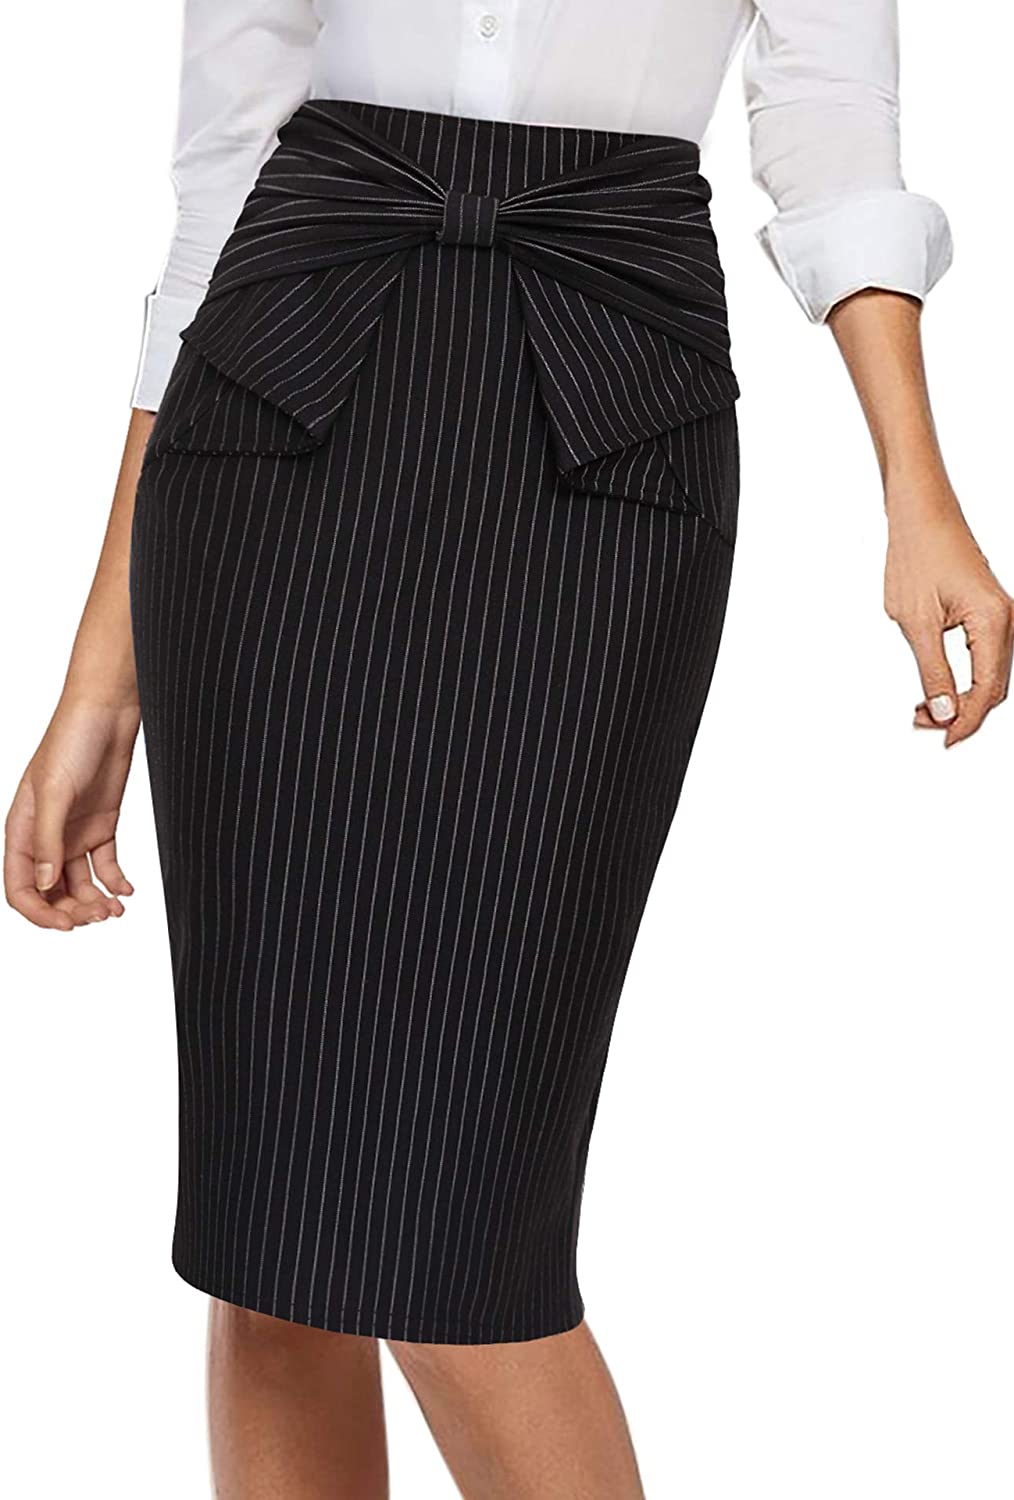 VFSHOW Womens Pleated Bow High Waist Slim Work Office Business Pencil Skirt  | eBay